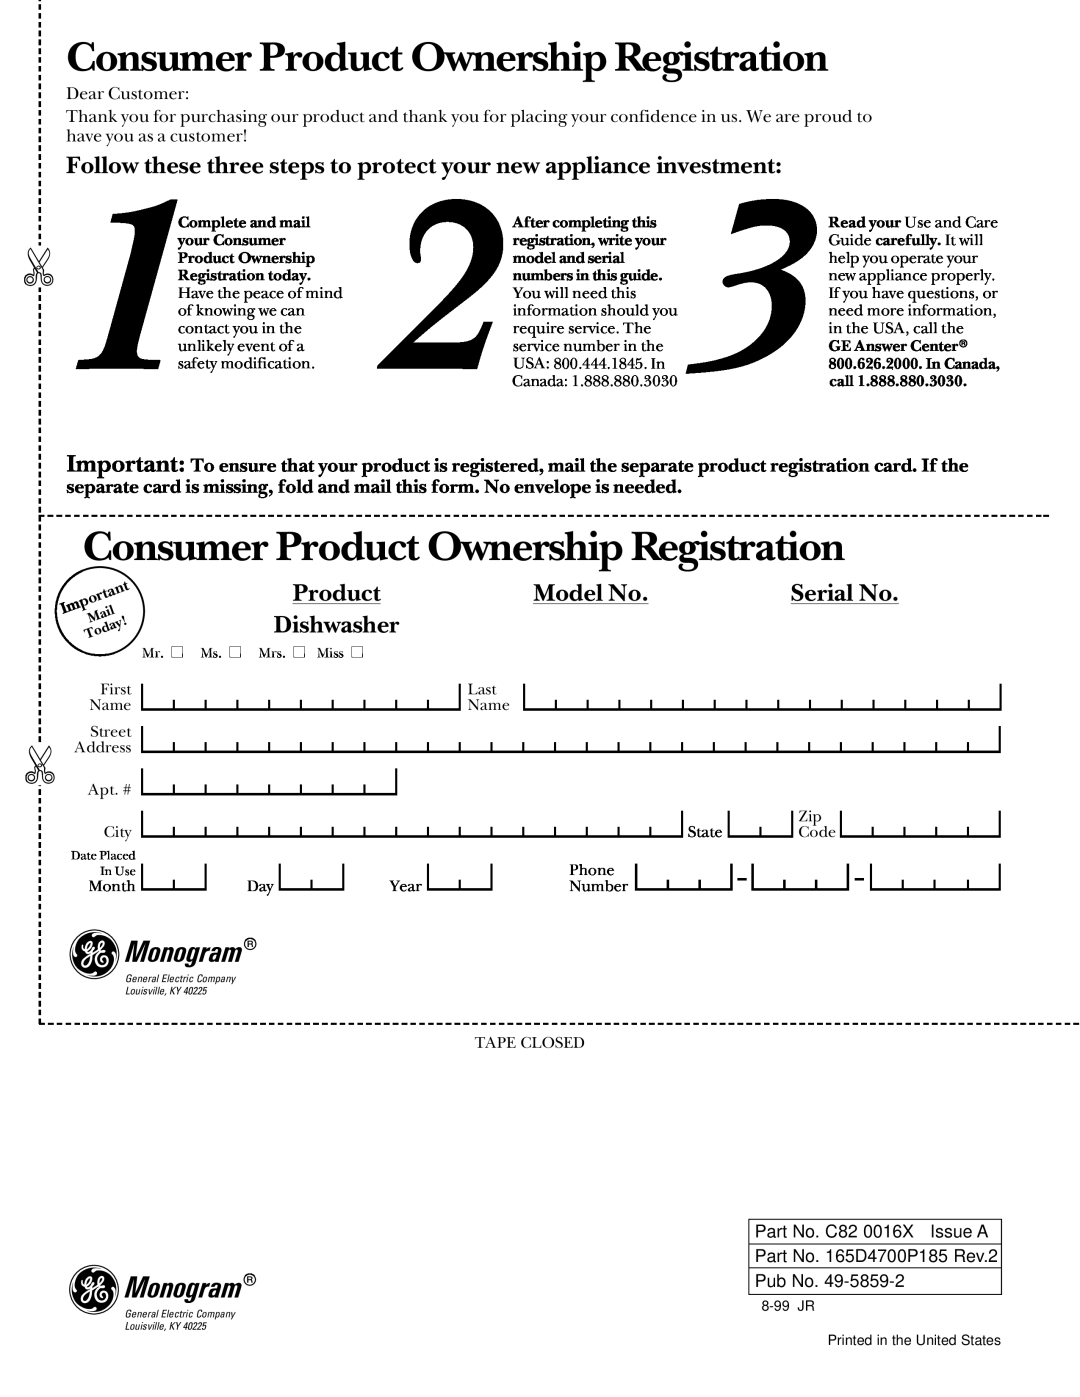 GE Monogram ZBD5700, ZBD5900, ZBD5600 Consumer Product Ownership Registration, Model No, Serial No, Dishwasher, Monogram 